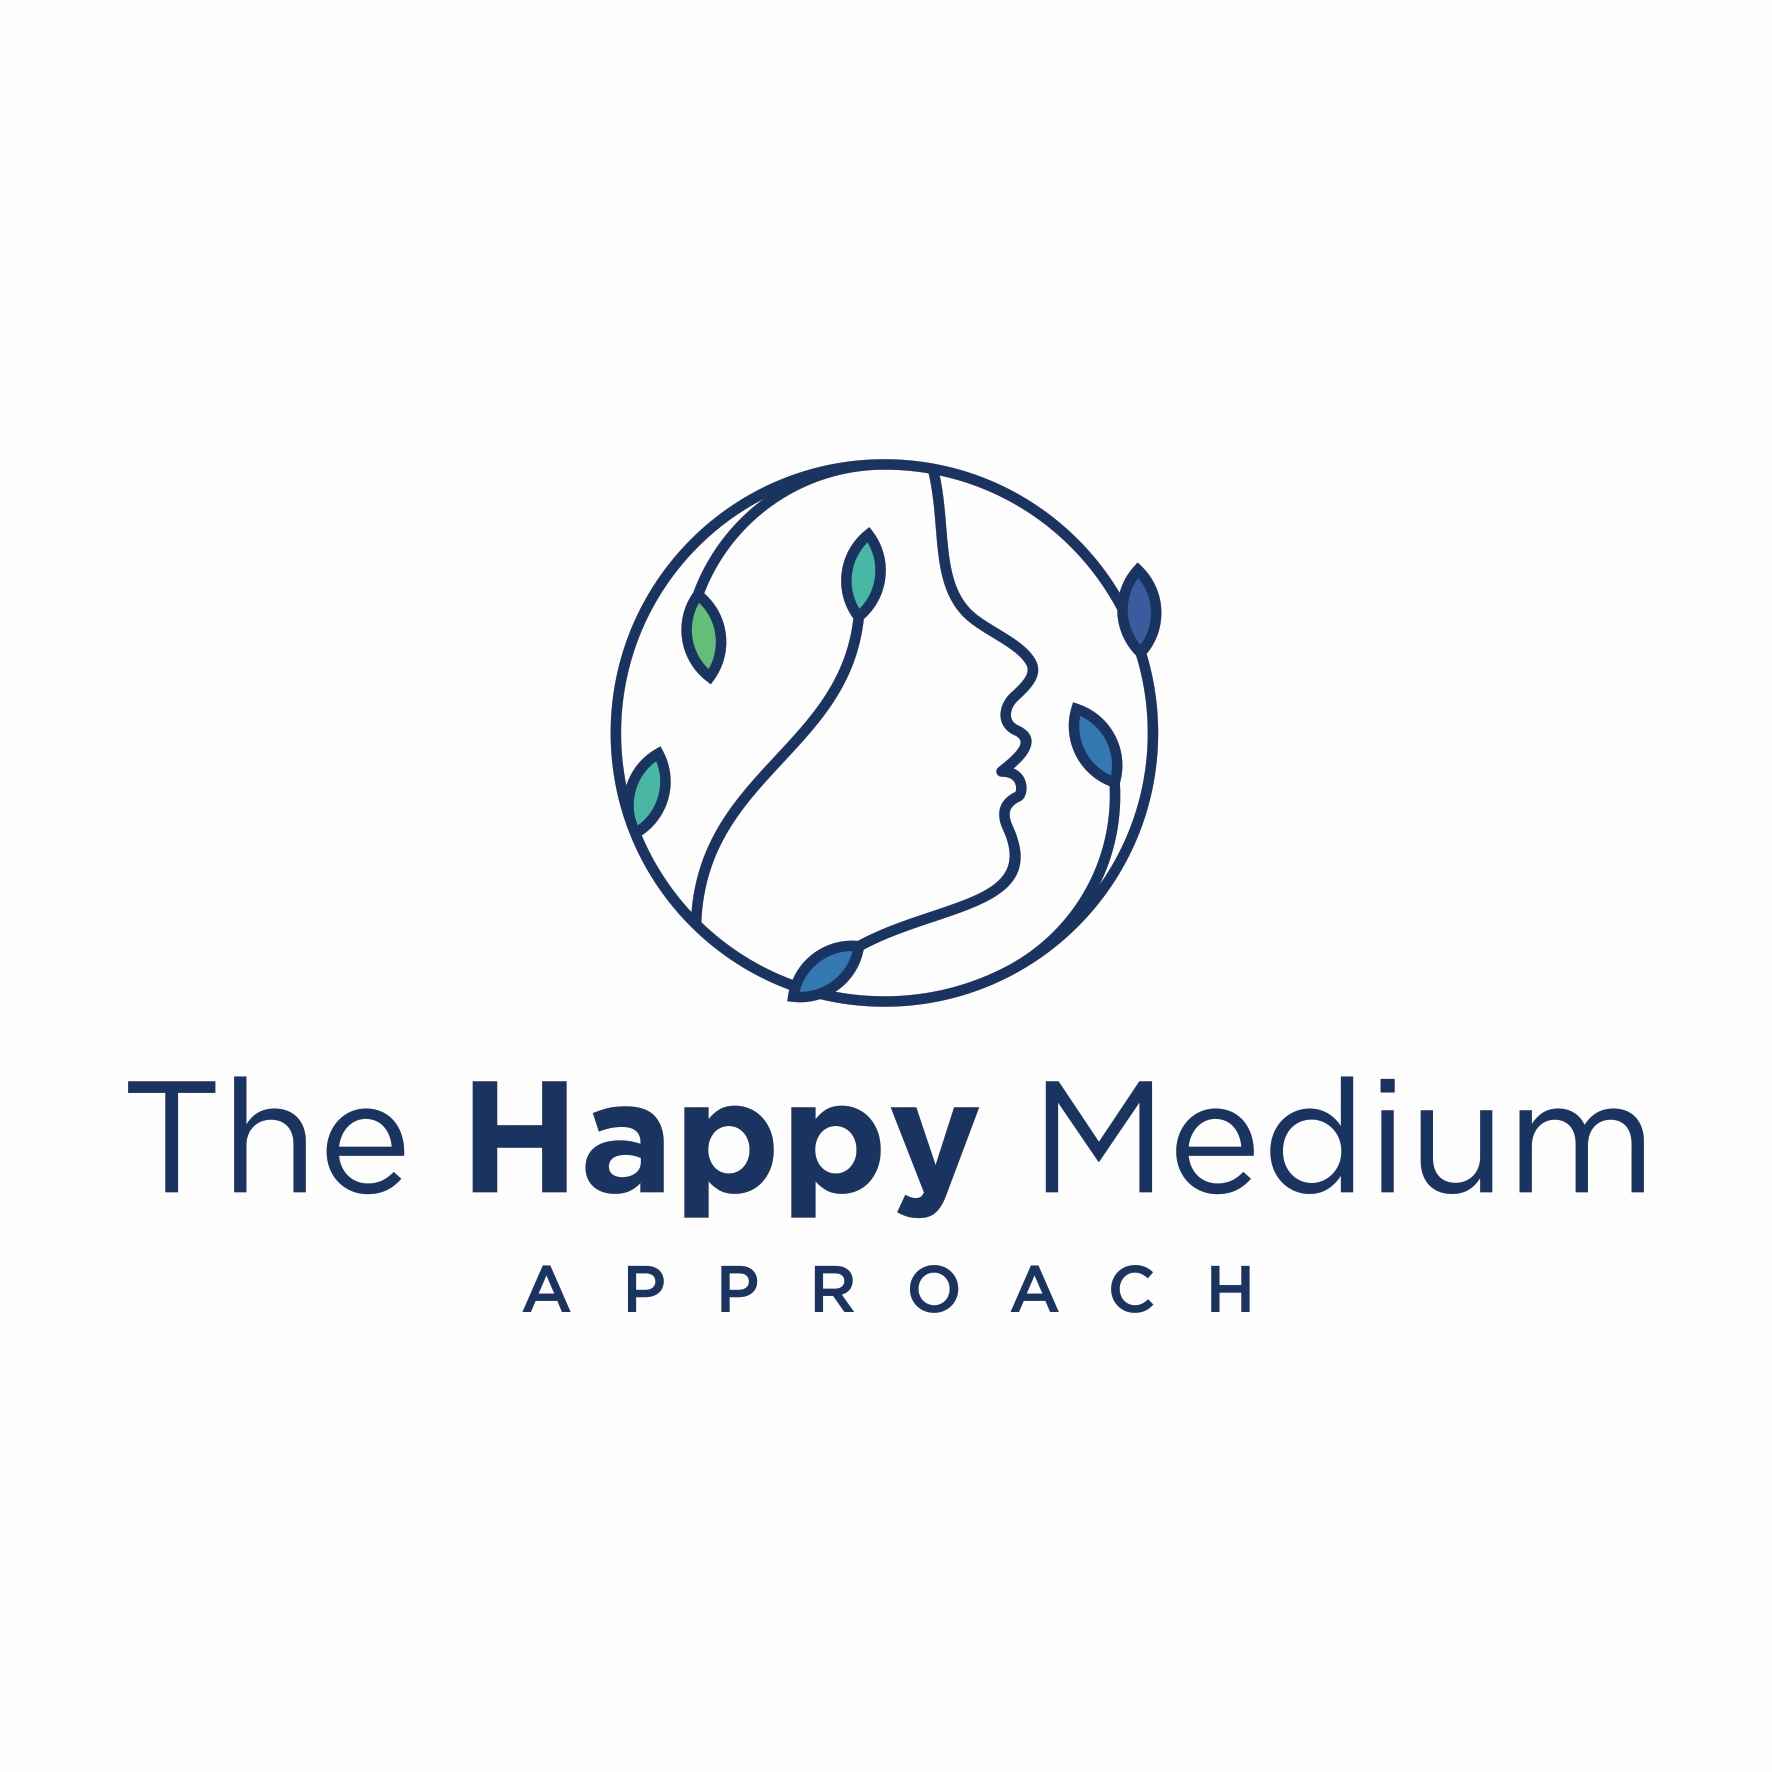 The Happy Medium Approach logo